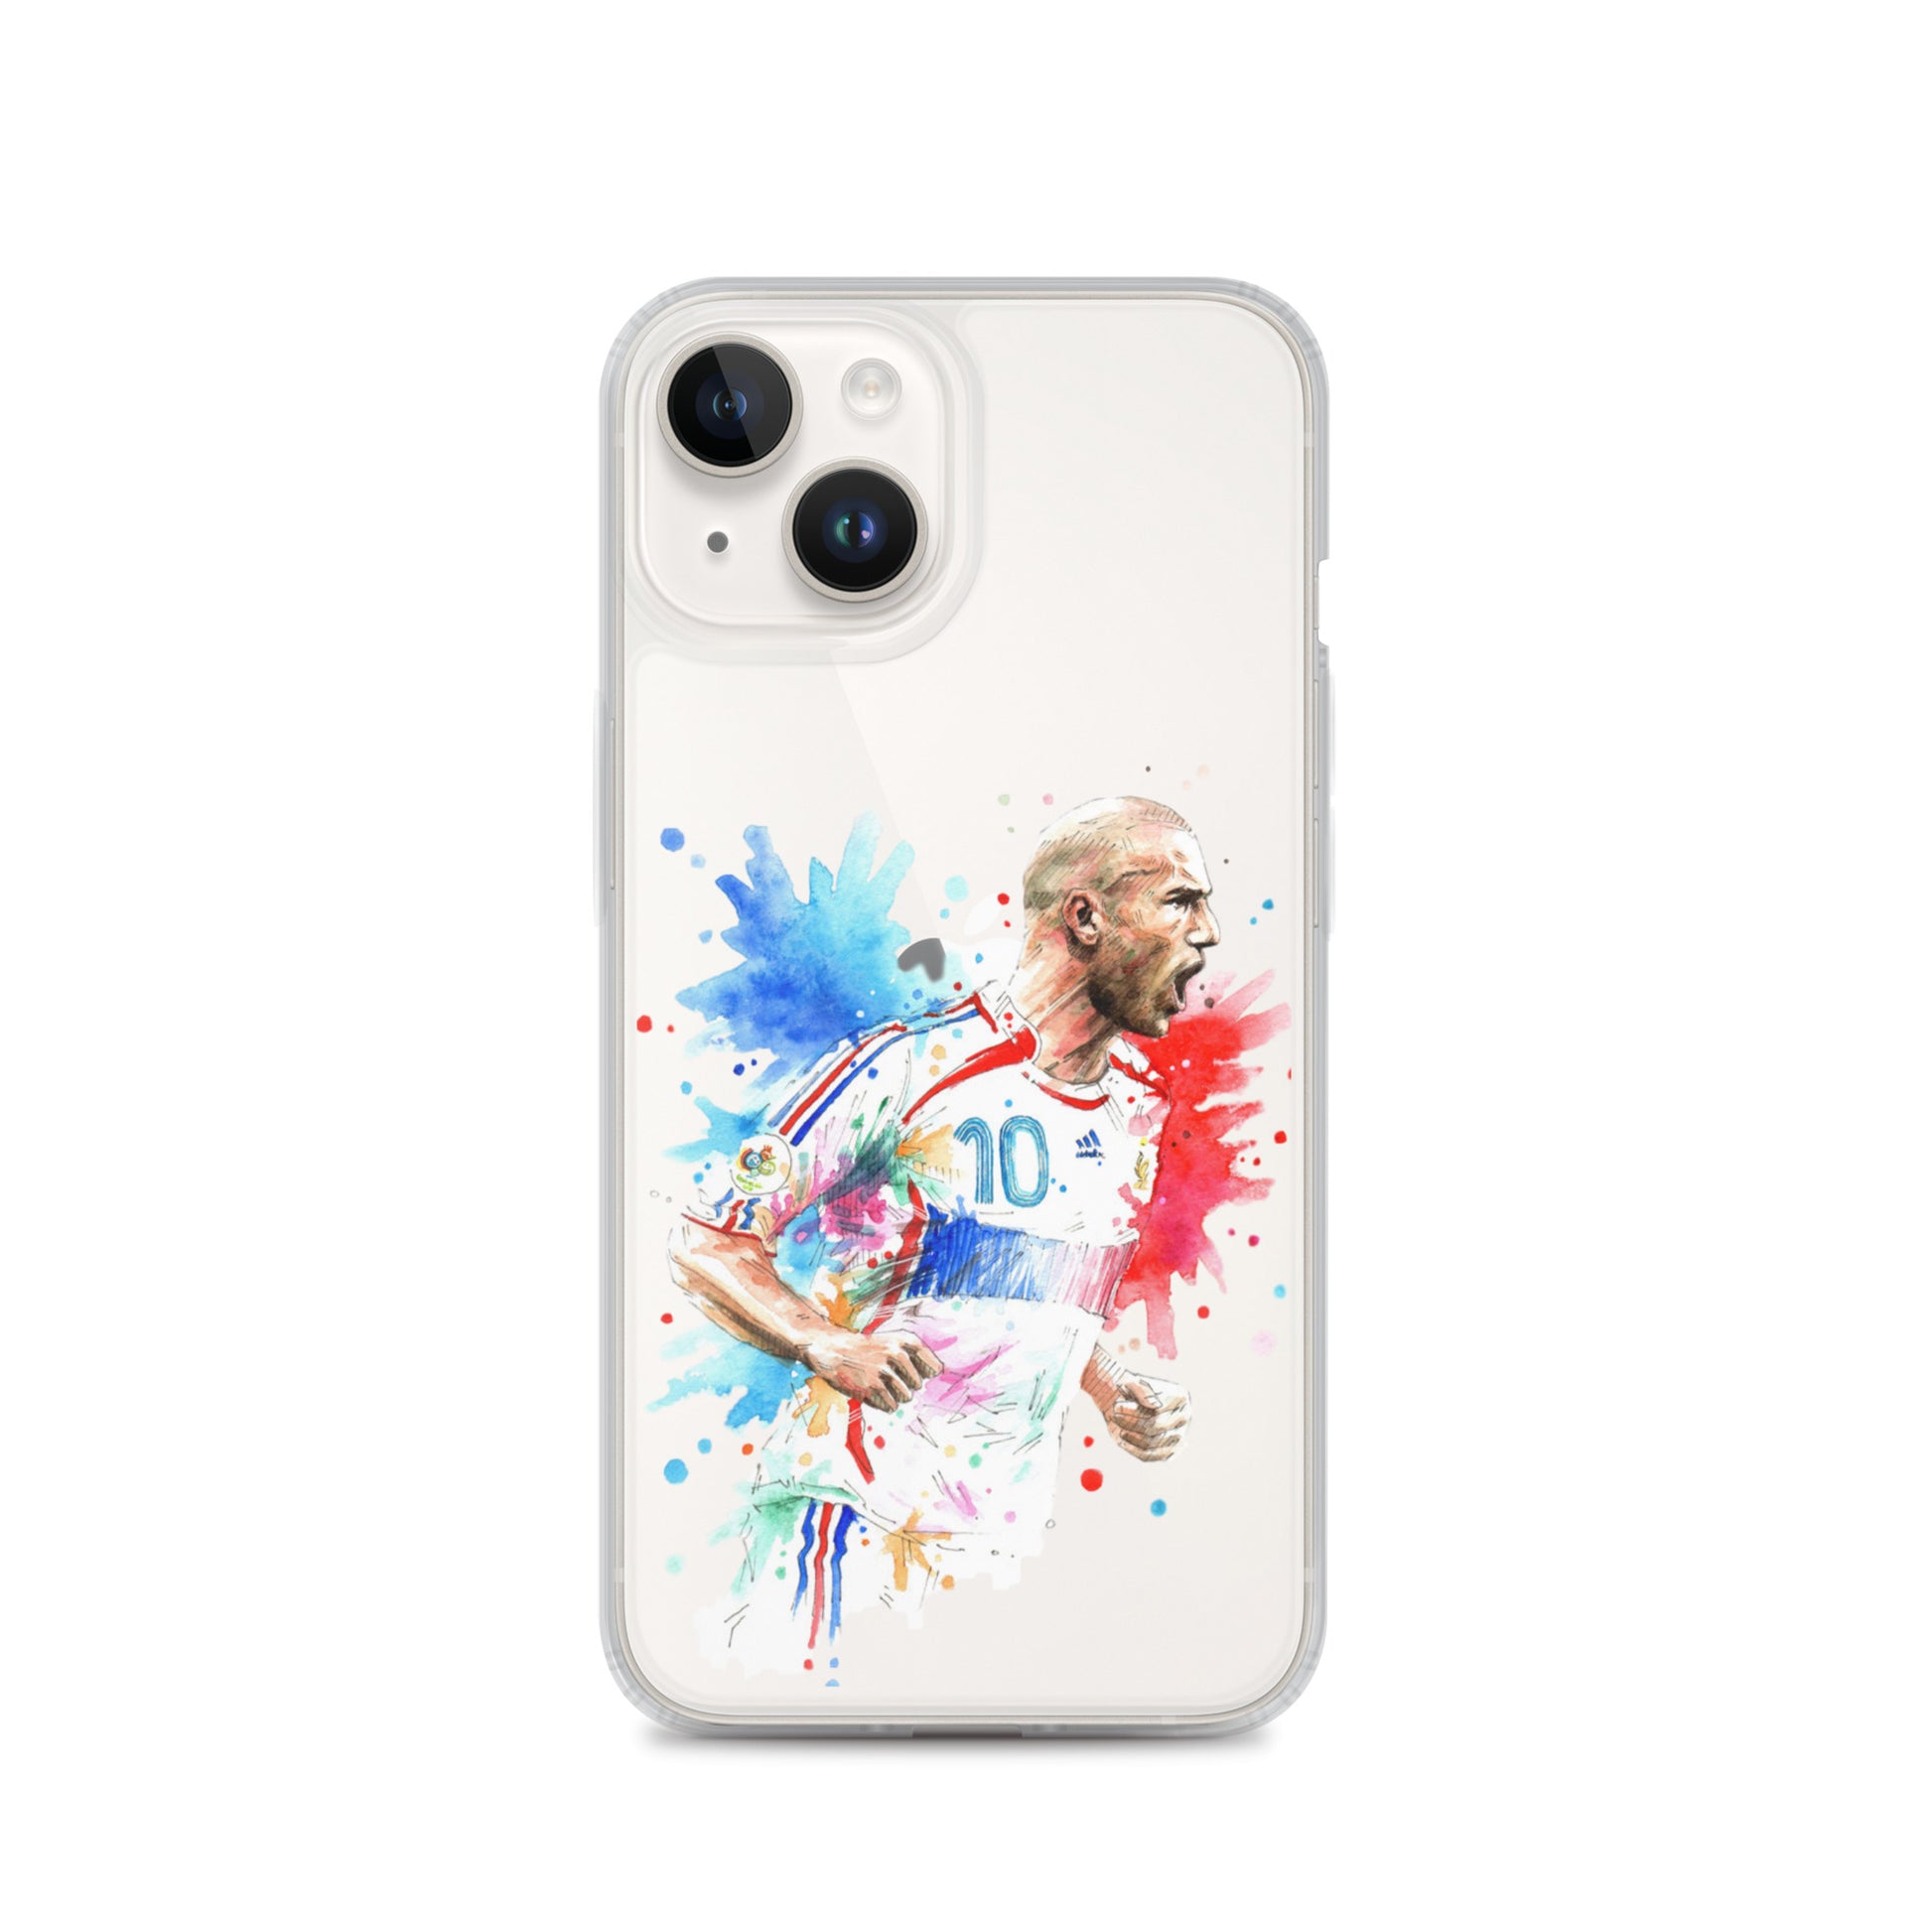 France Zinadine Zidane "Zizou" Vintage Clear Case for iPhone® - The 90+ Minute